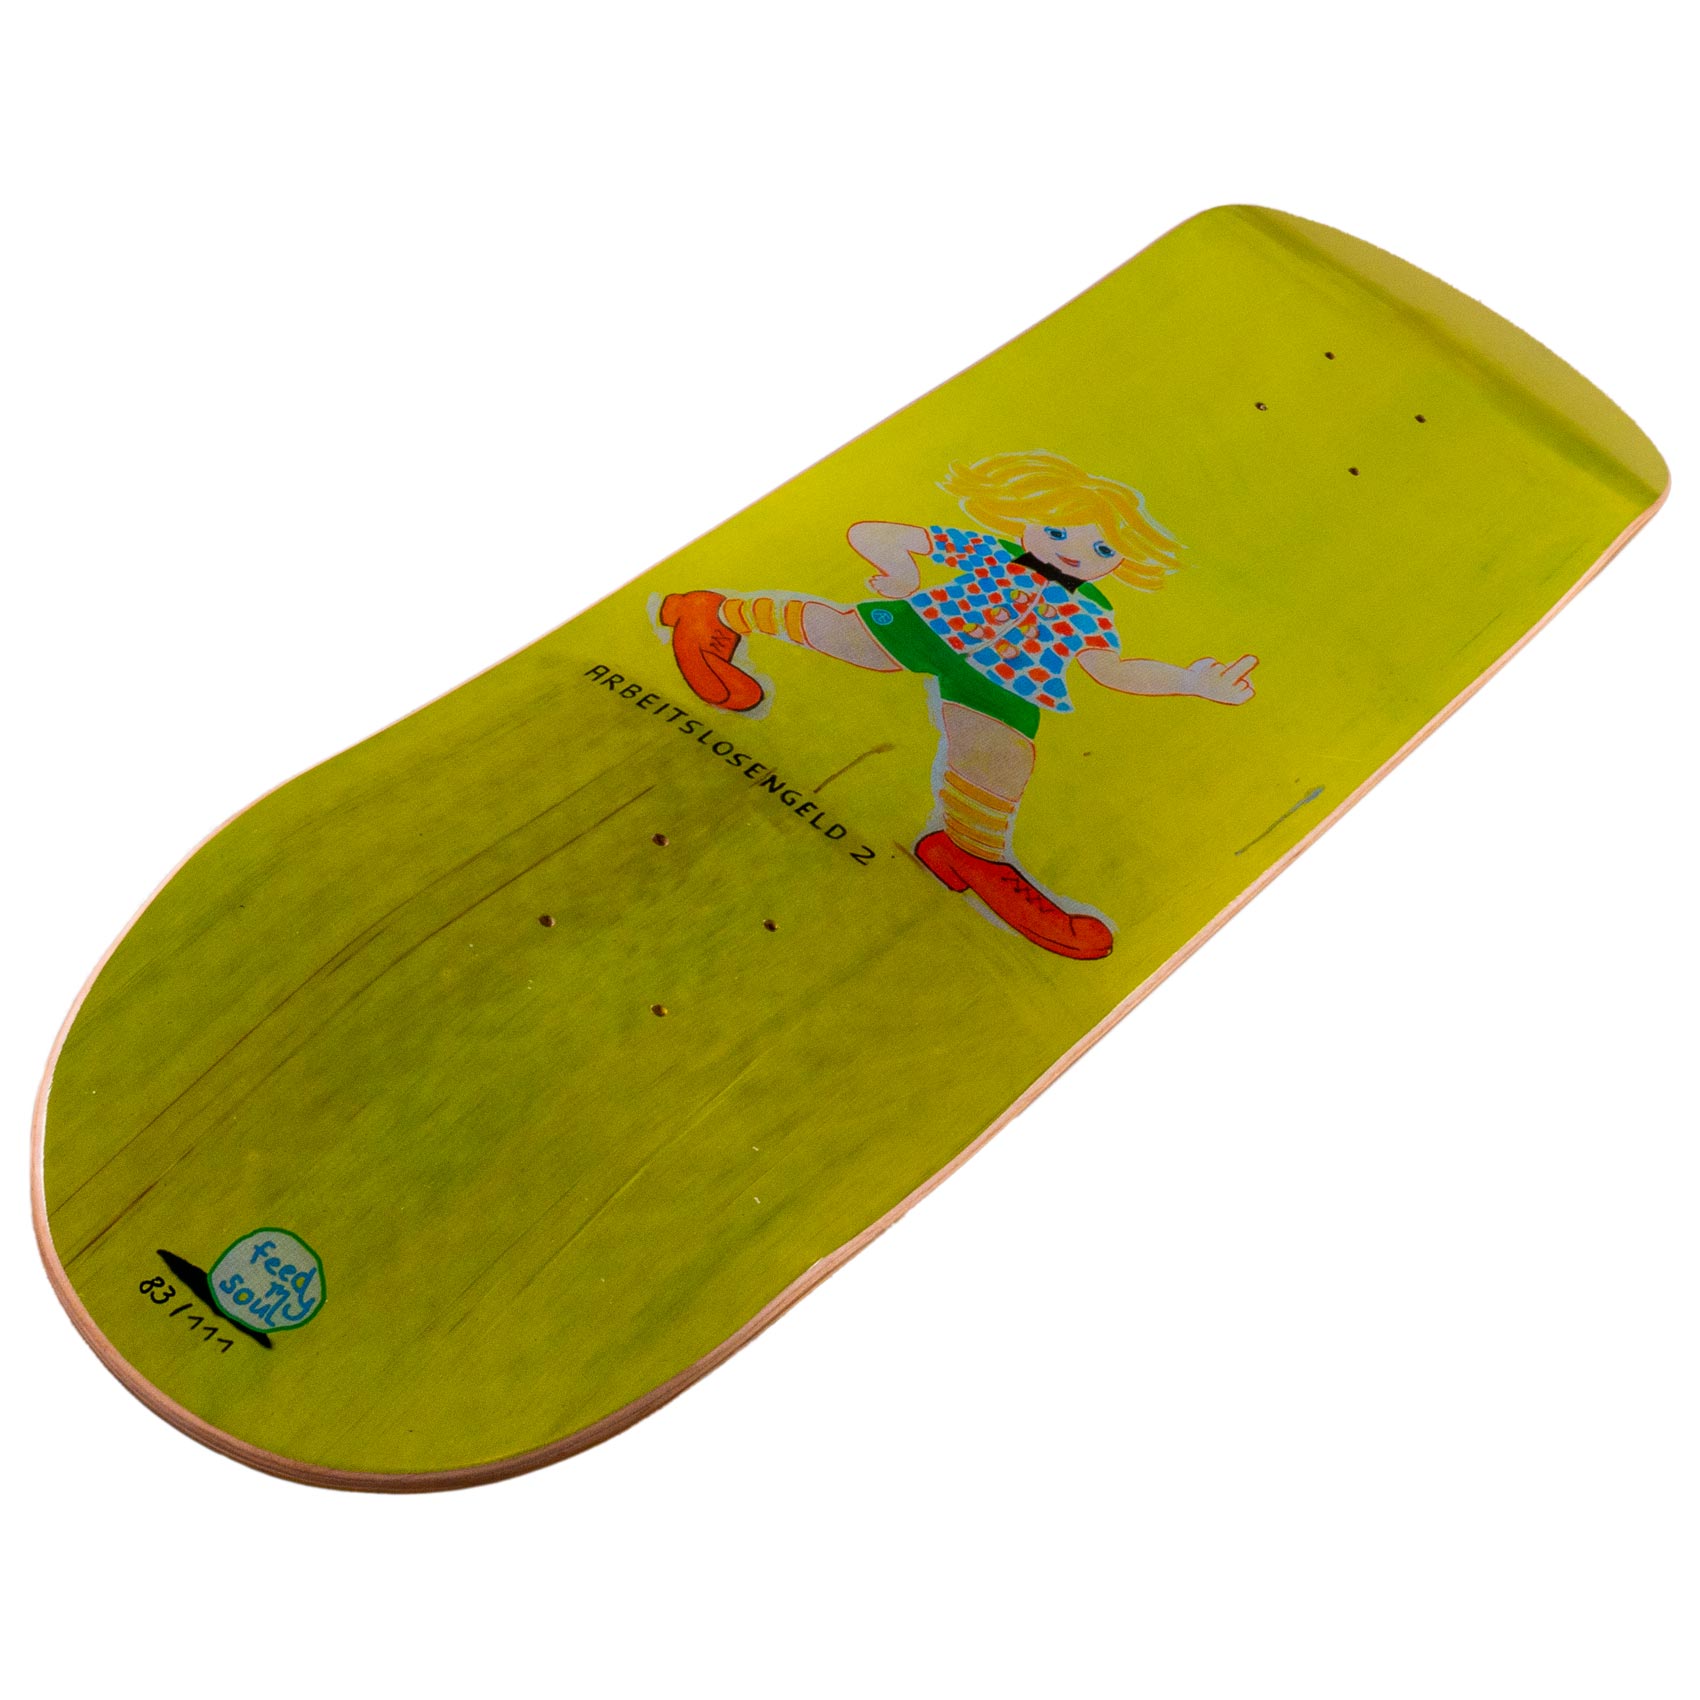 feedmysoul x Ali Endrullat Skateboard Deck ALG 2 8.0"